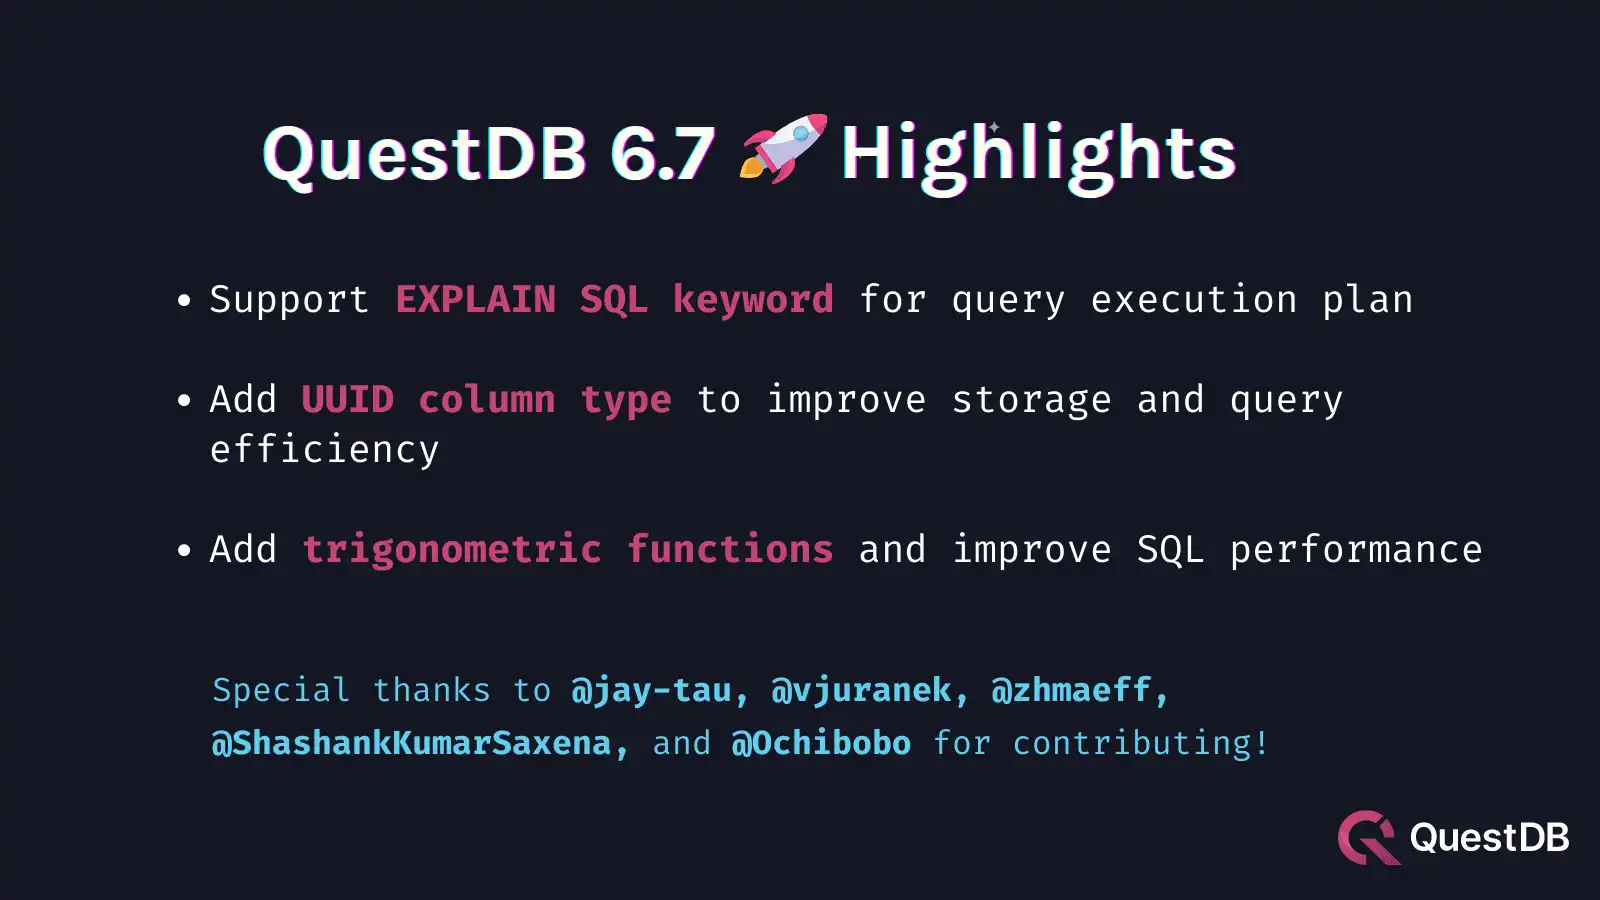 QuestDB 6.7 highlights